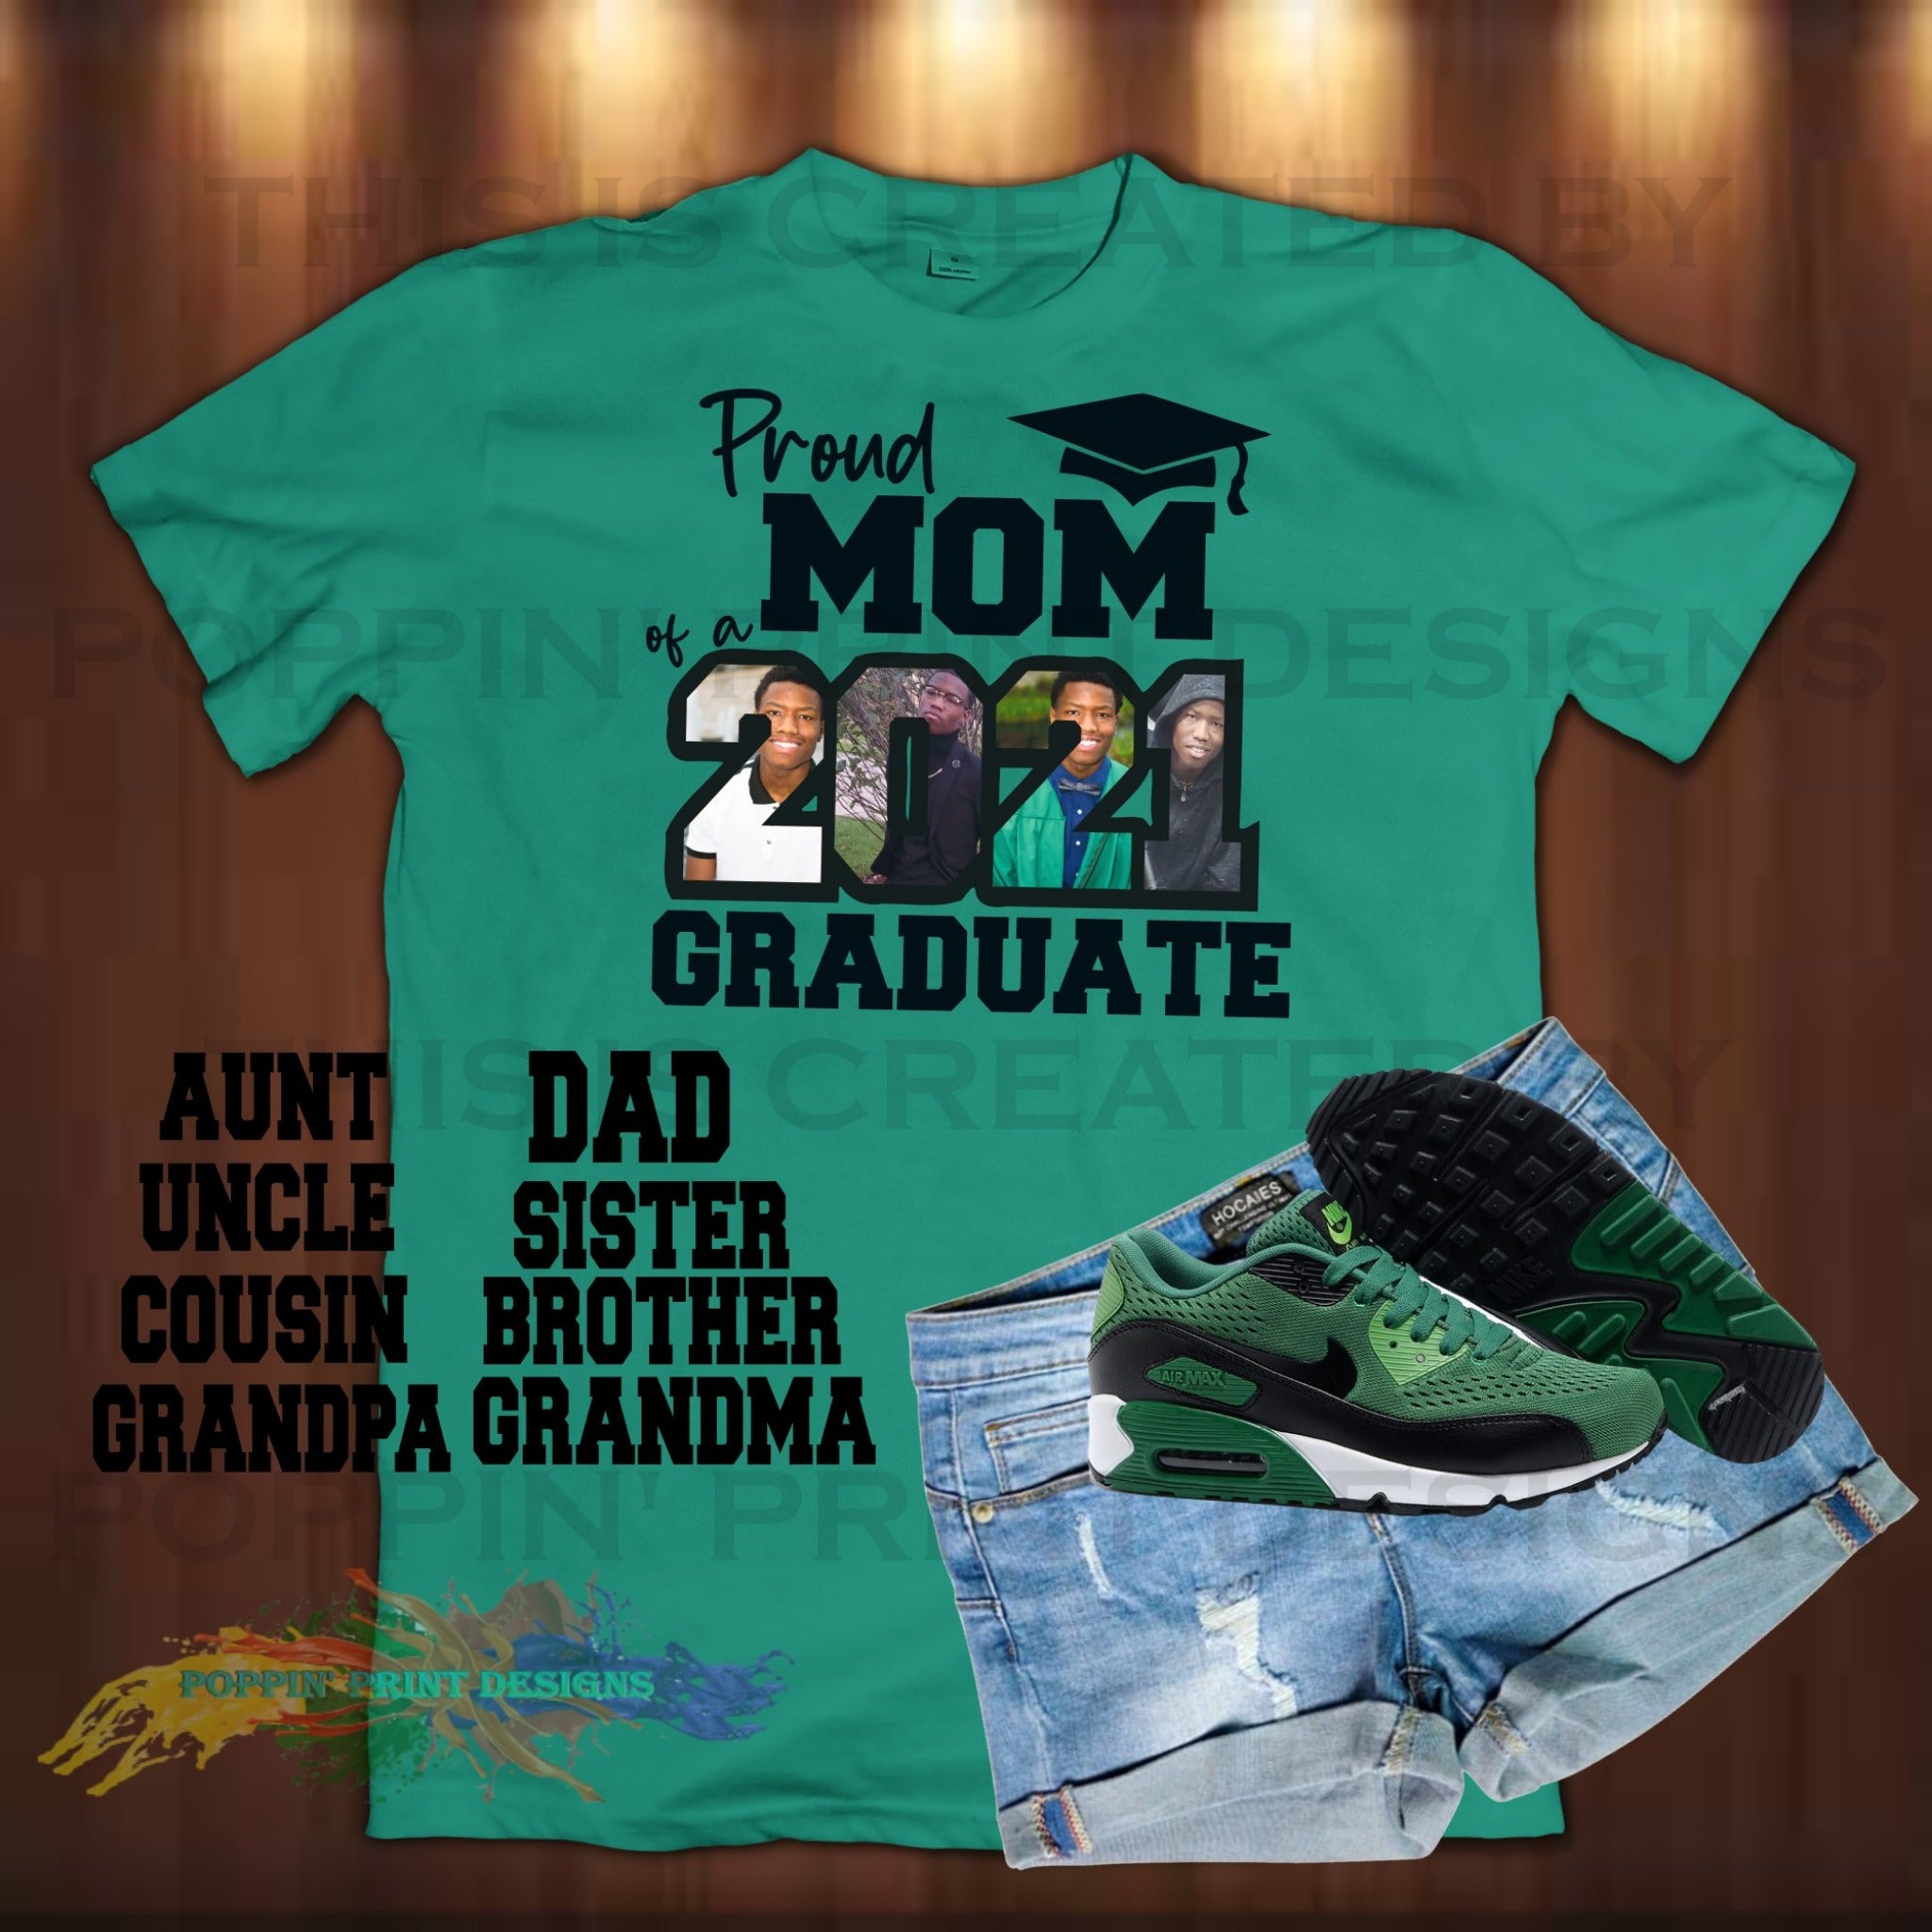 Rep Your Graduate T-Shirt